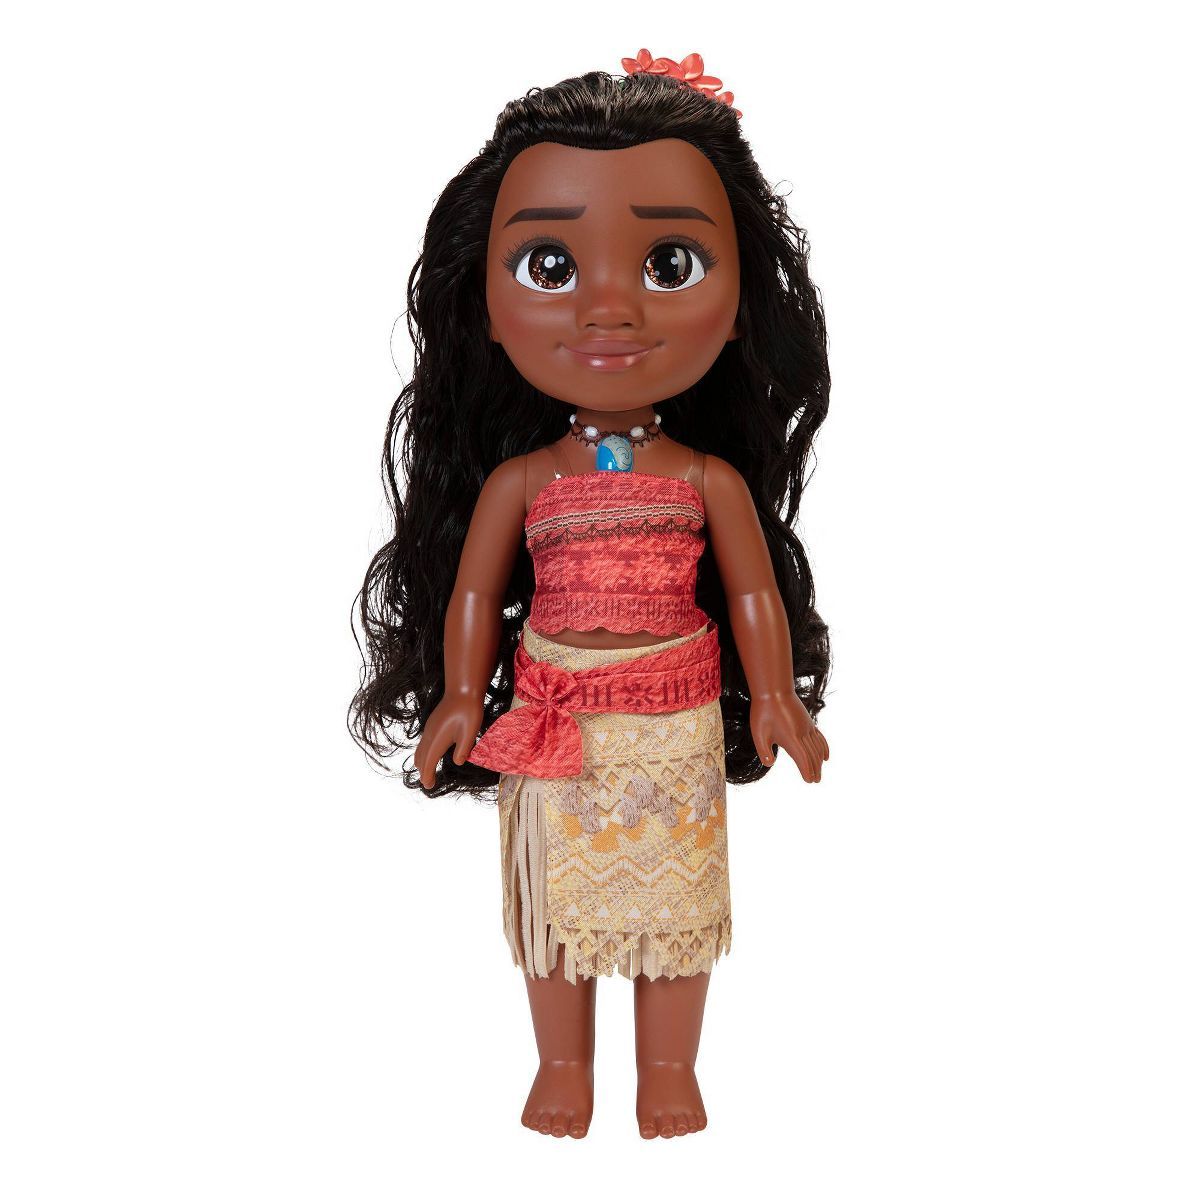 Disney Princess My Friend Moana Doll | Target